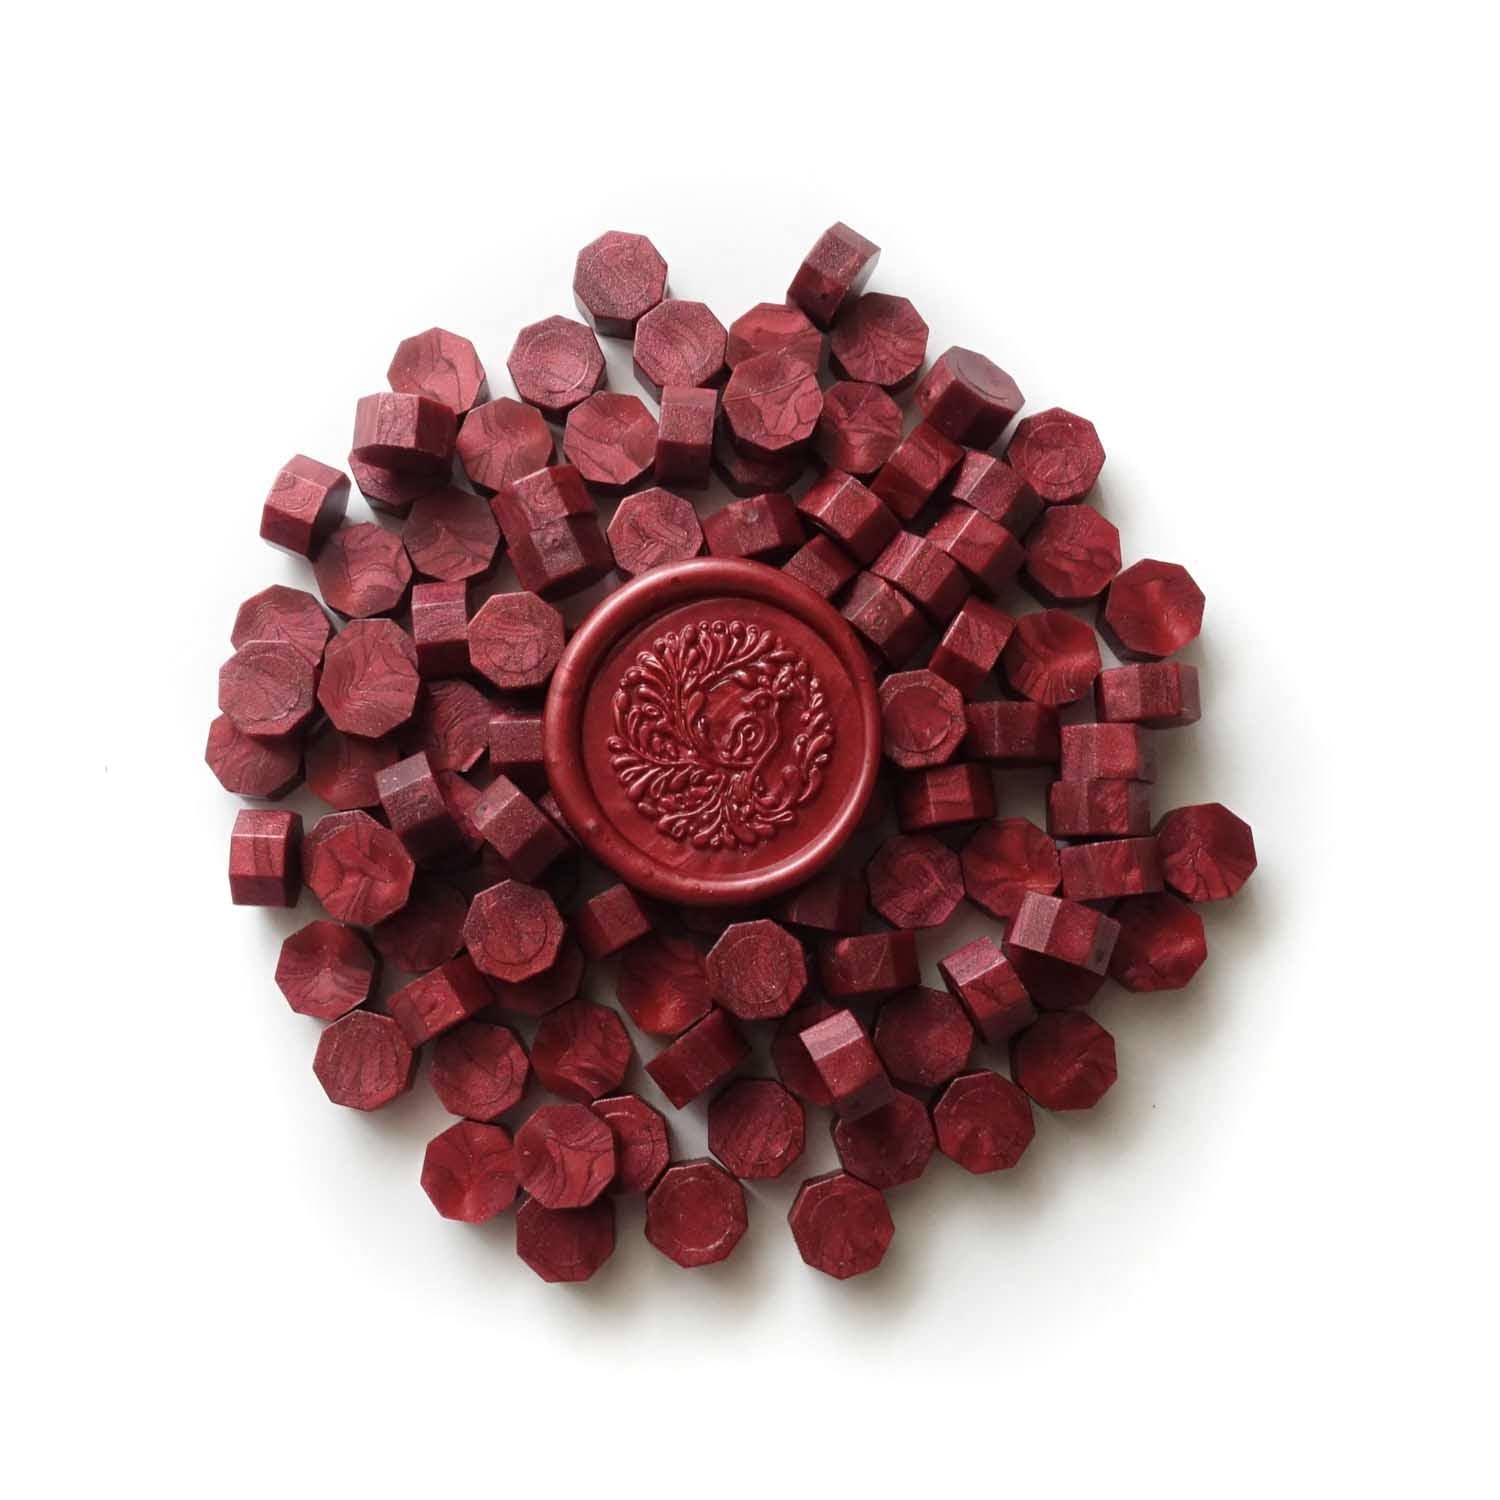 Wax Seal in Wine Red Pearlised – Cartalia